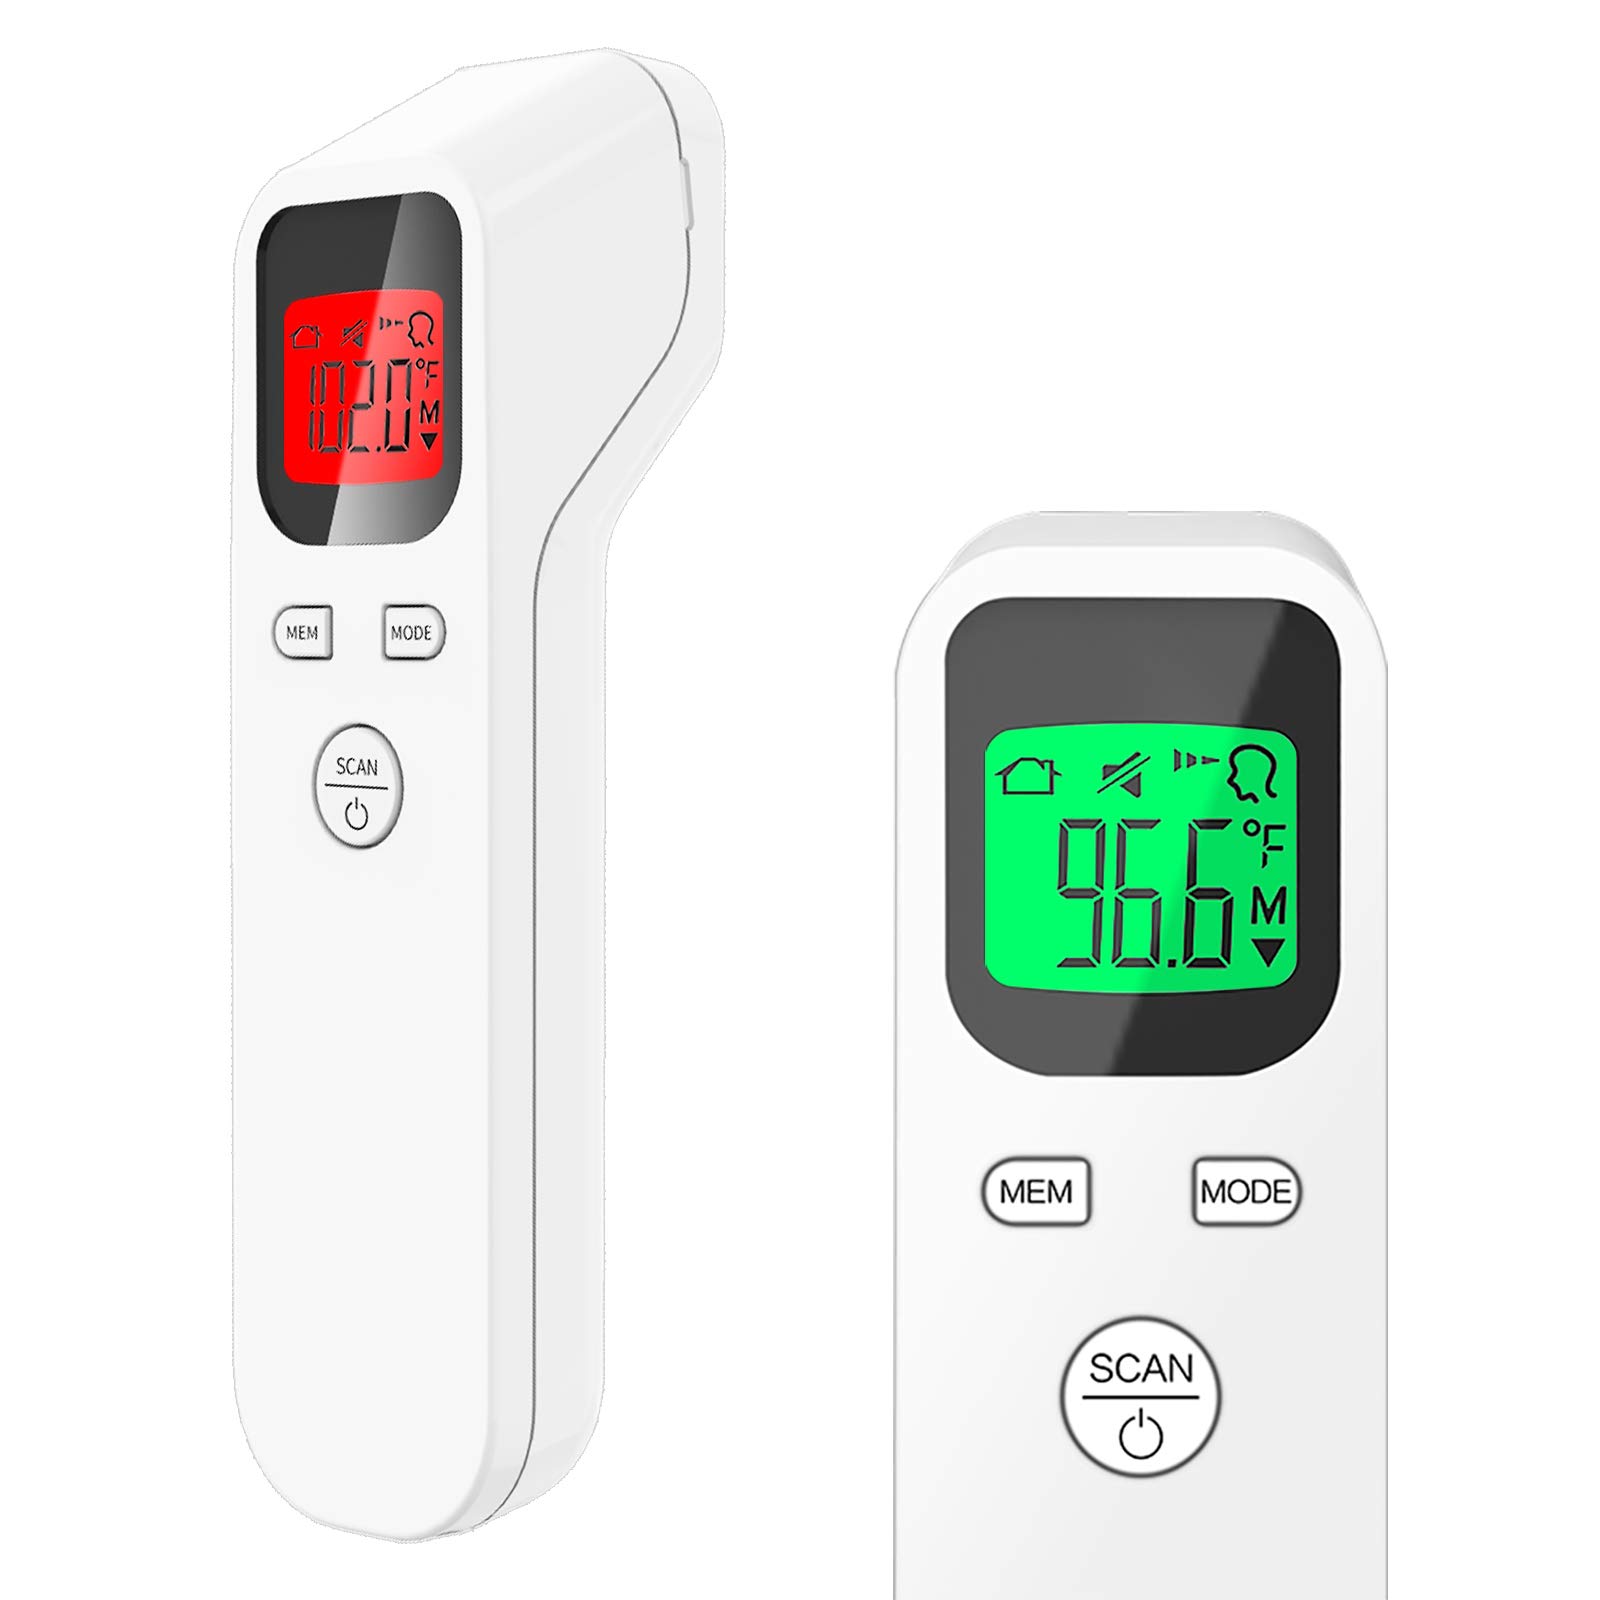 Infrared Temperature Gun/Thermometer – Ultimate Exotics